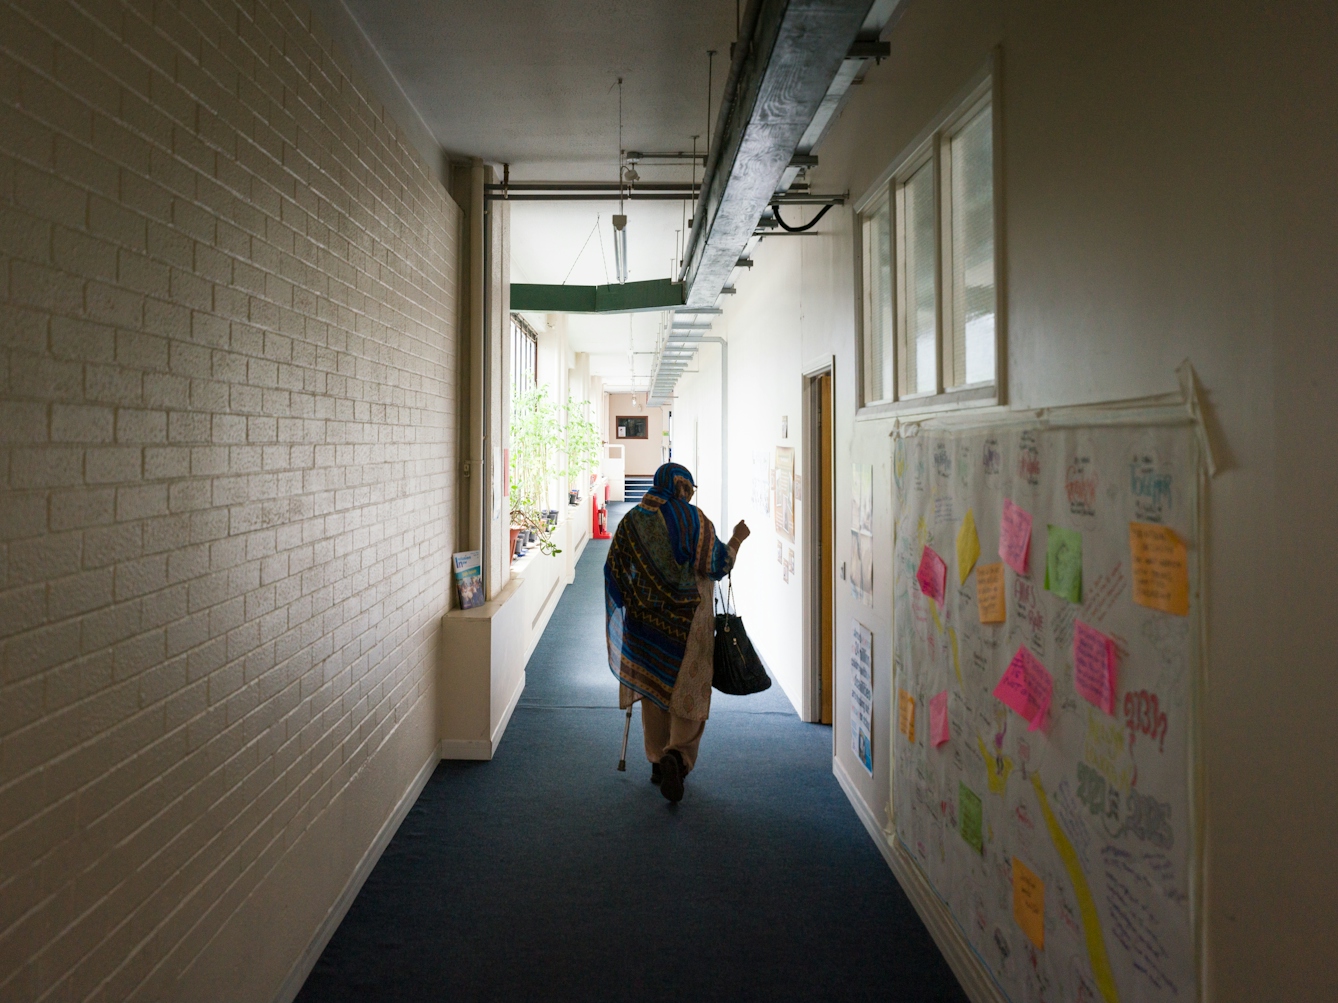 Photograph of Sarifa Patel walking down a corridor.